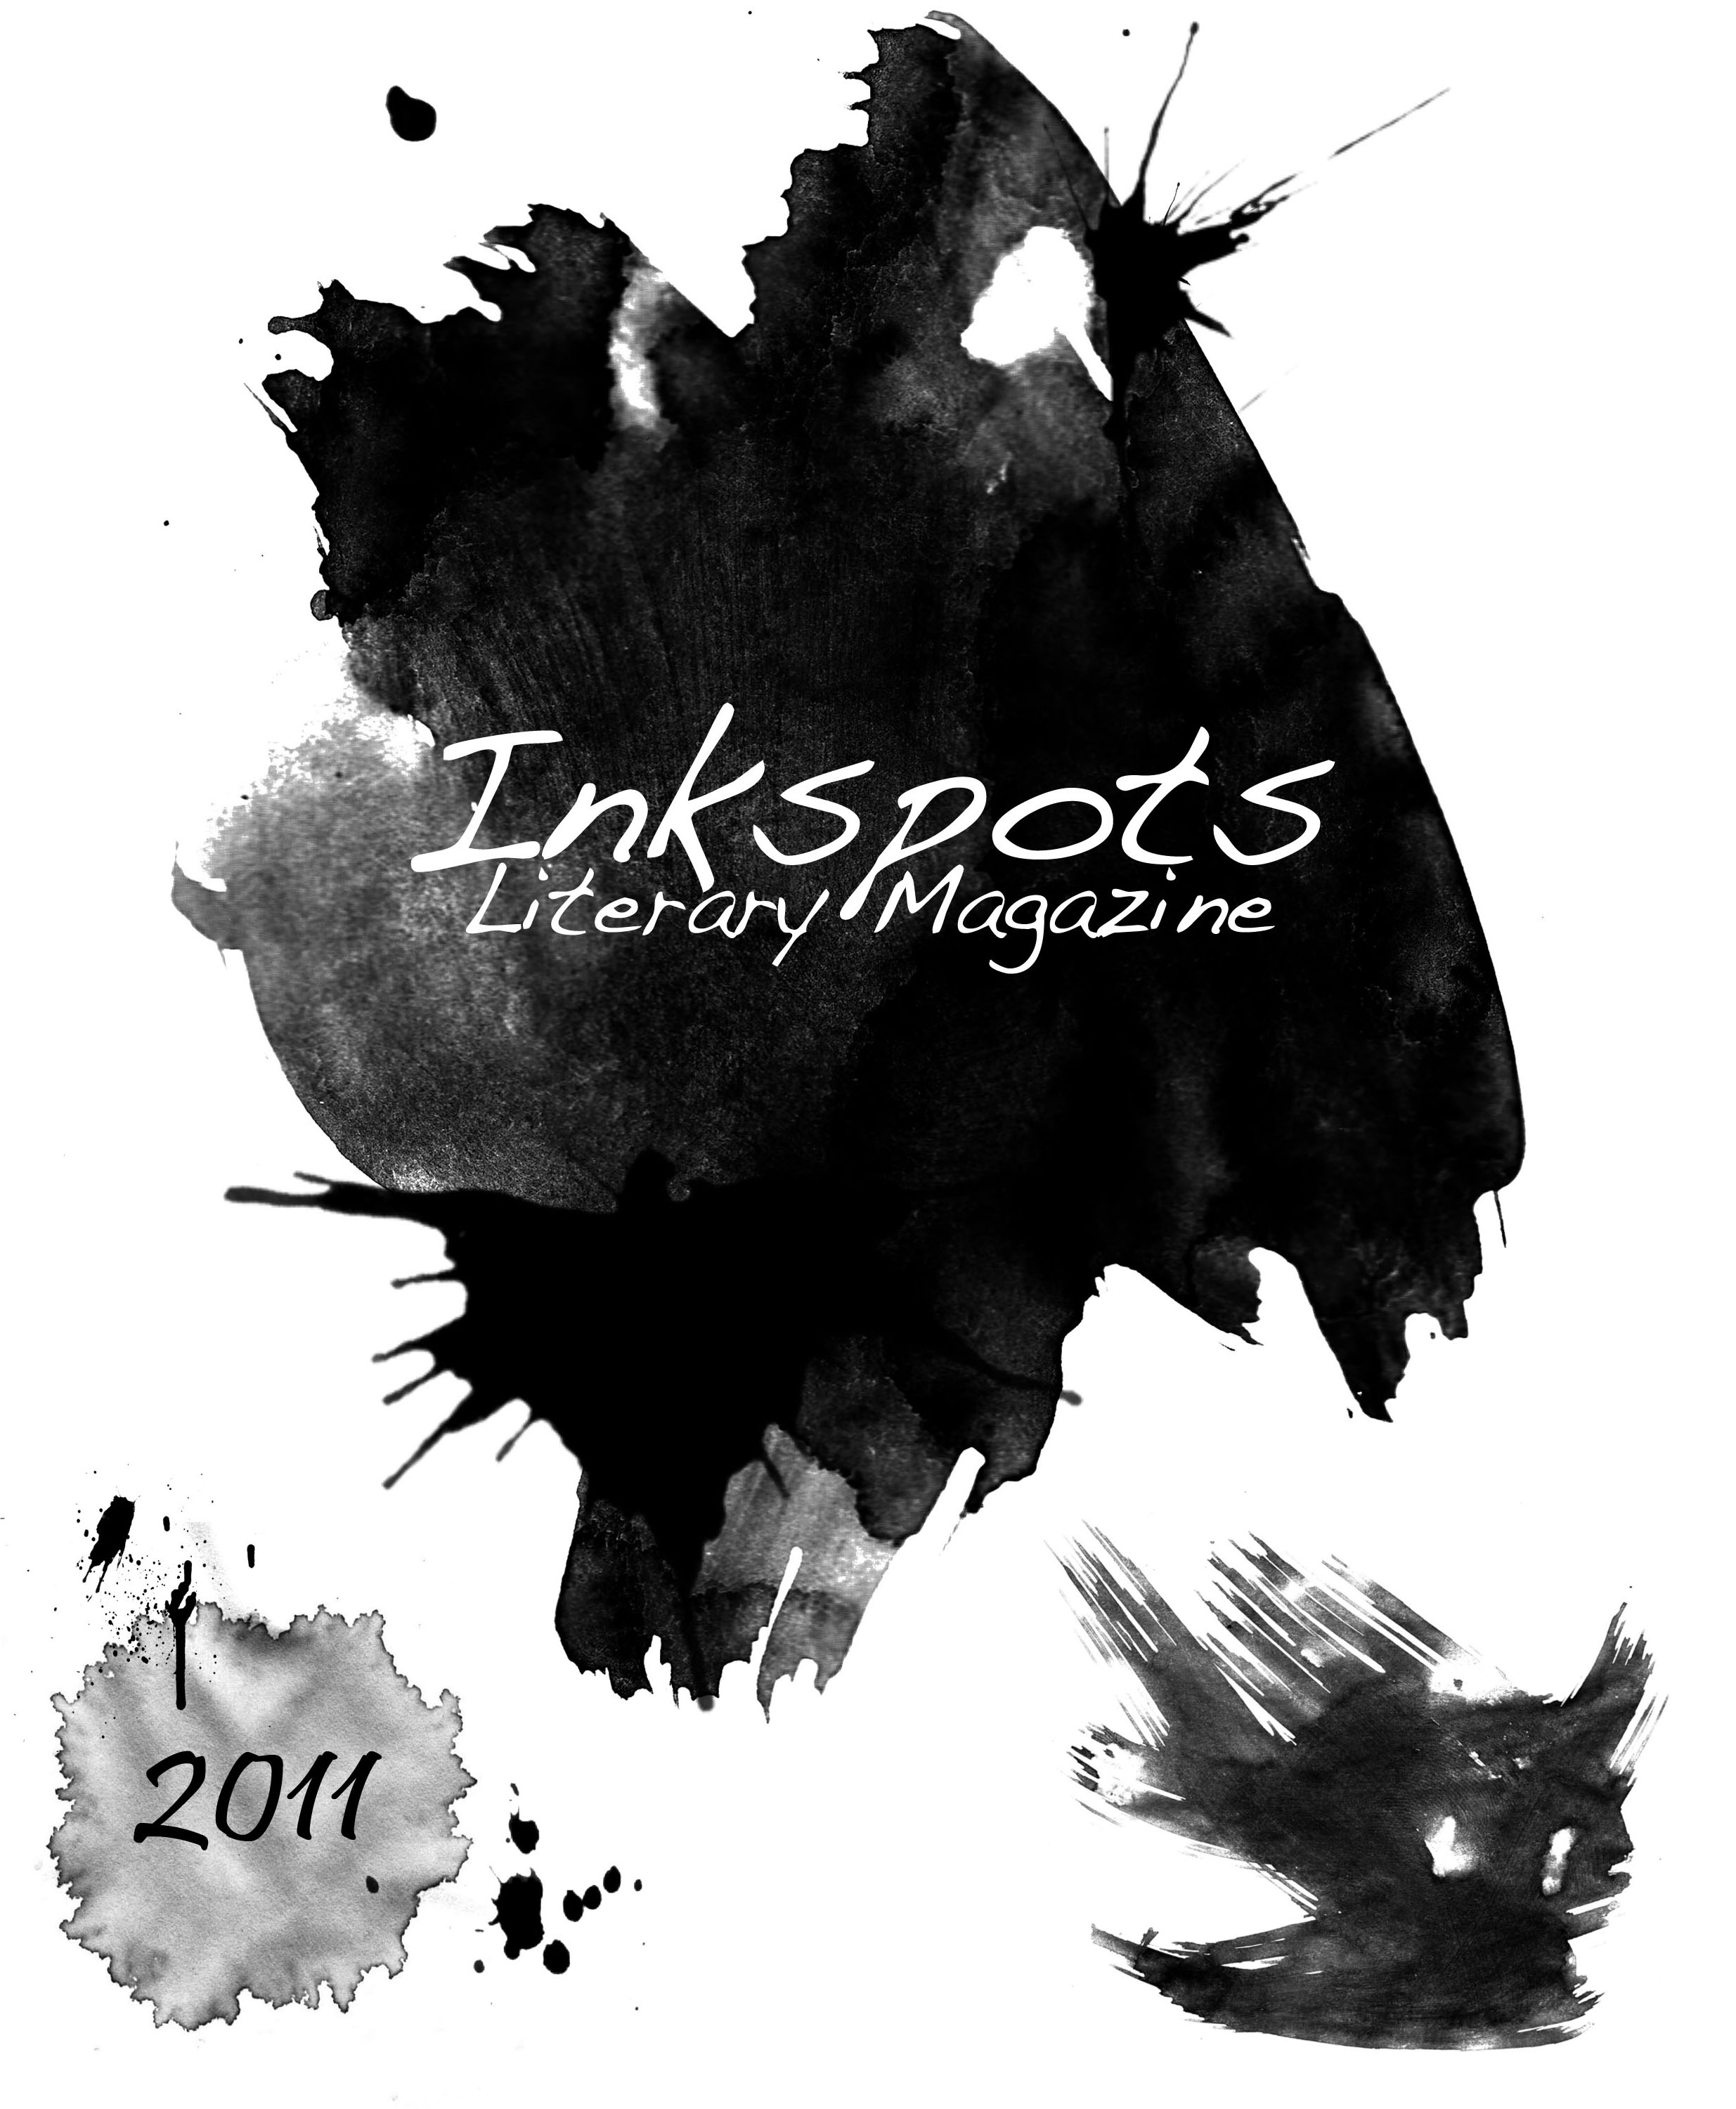 Inkspots Literary Magazine